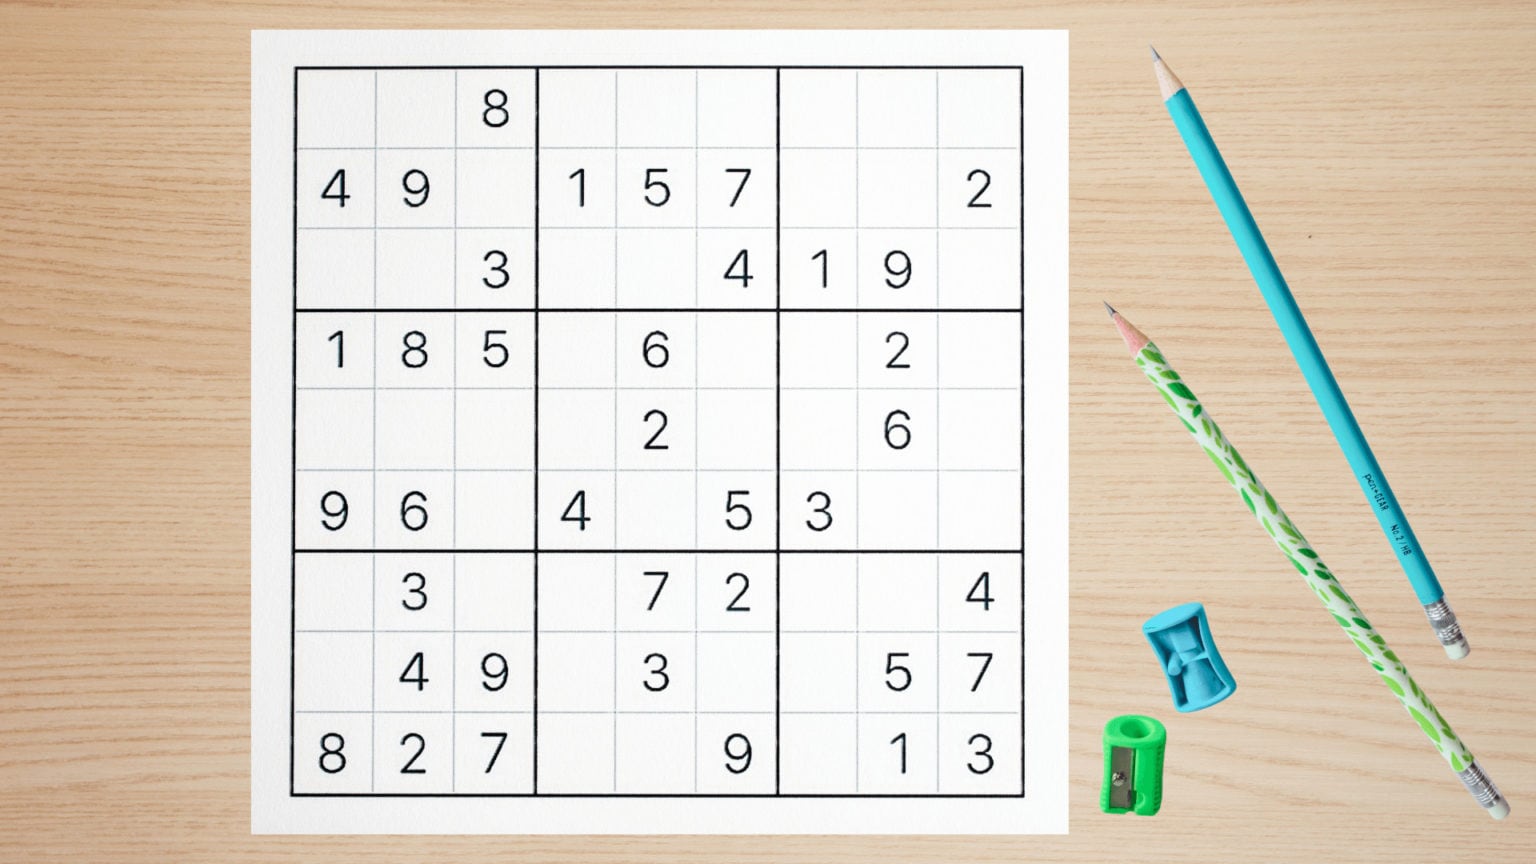 sudoku-game-rules-how-to-play-sudoku